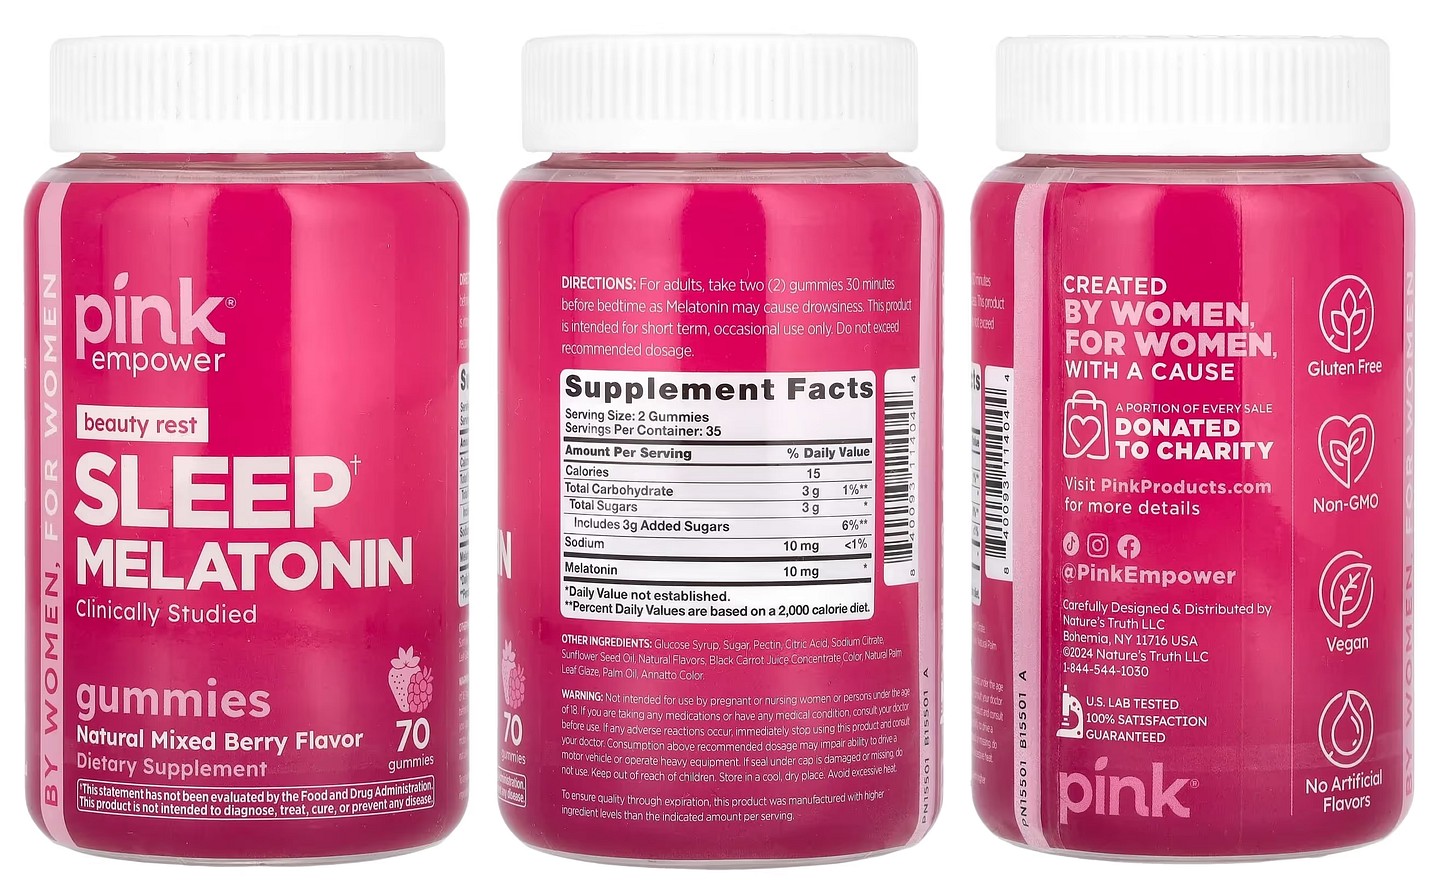 Pink, Beauty Rest Melatonin Sleep packaging